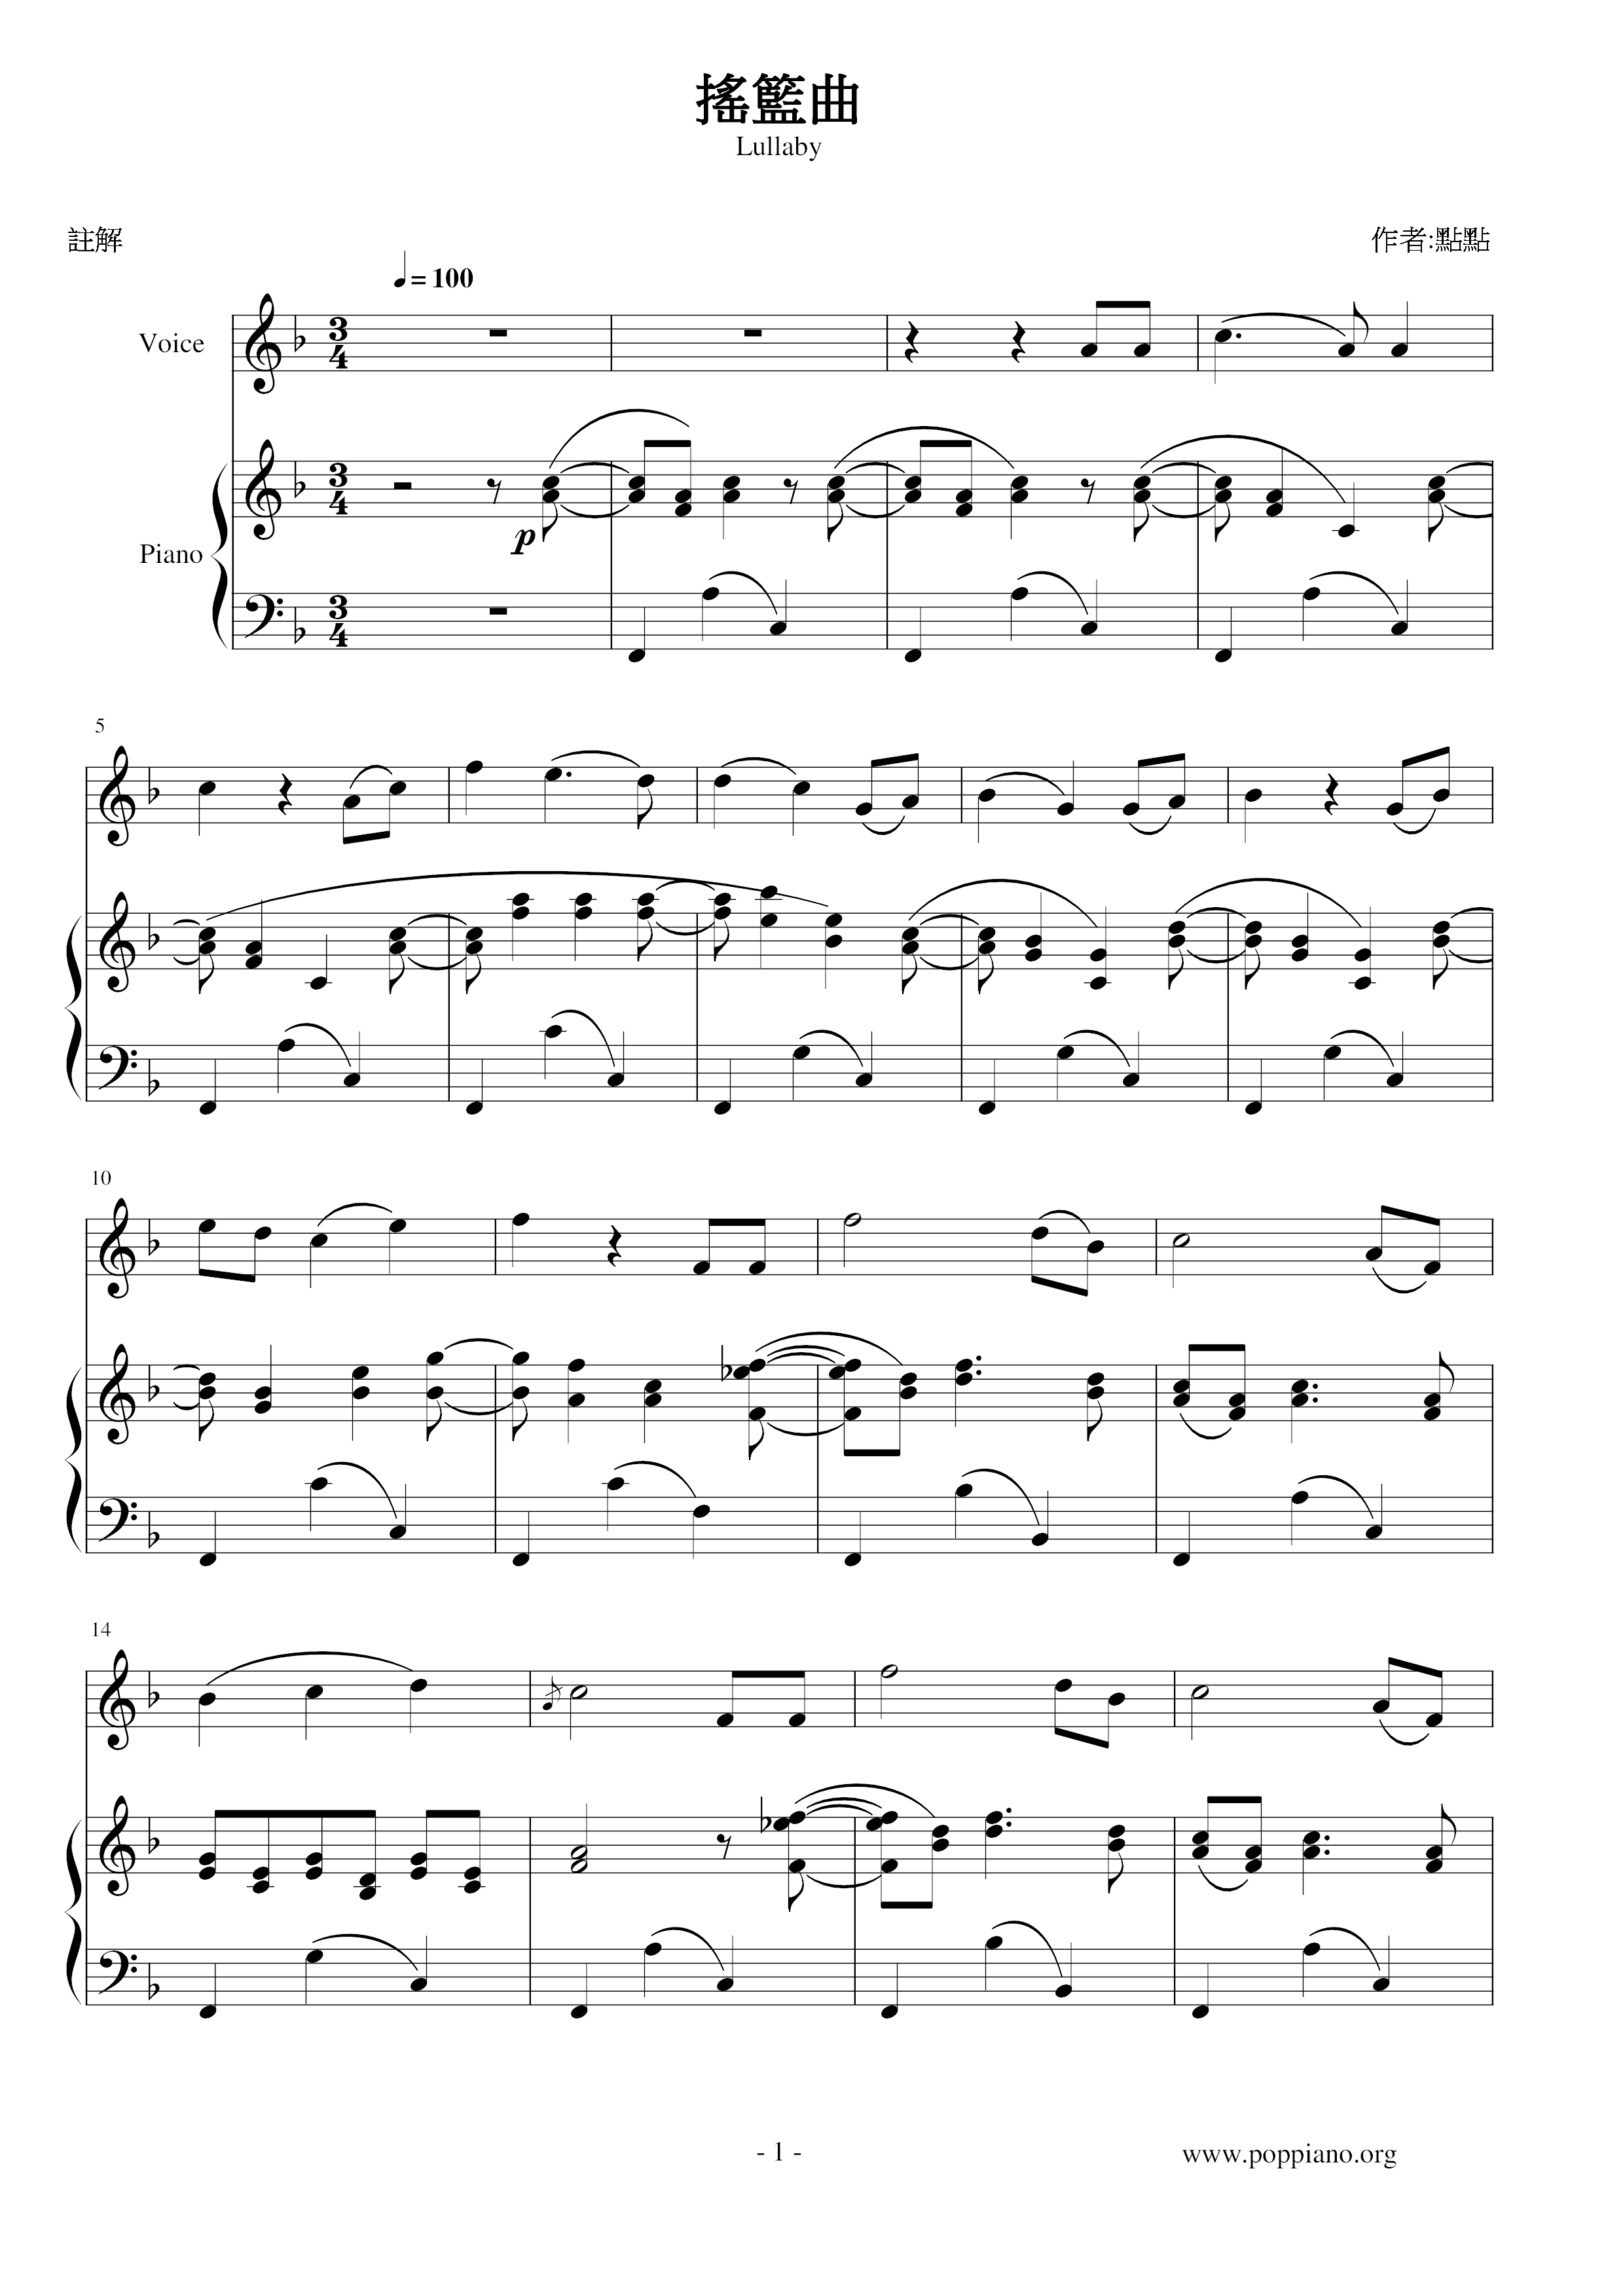 Brahms' Lullaby Score